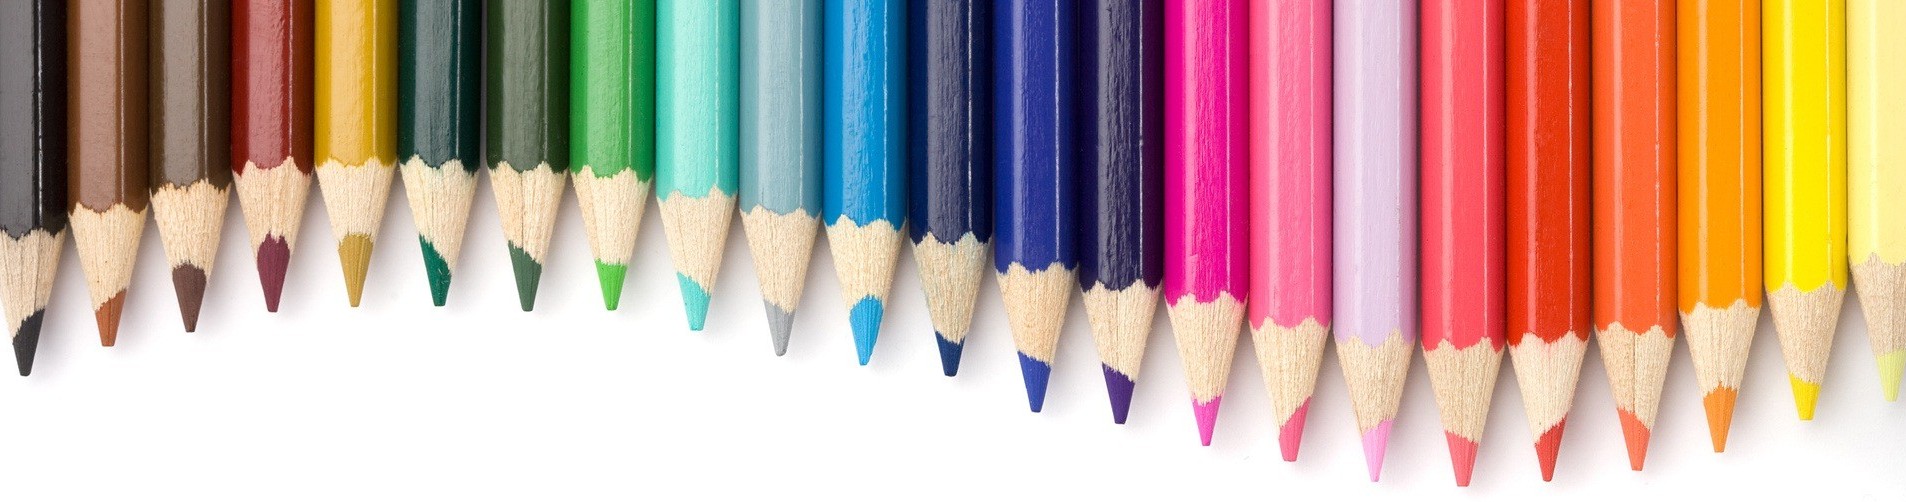 Pre School Drawing Pencils - HD Wallpaper 